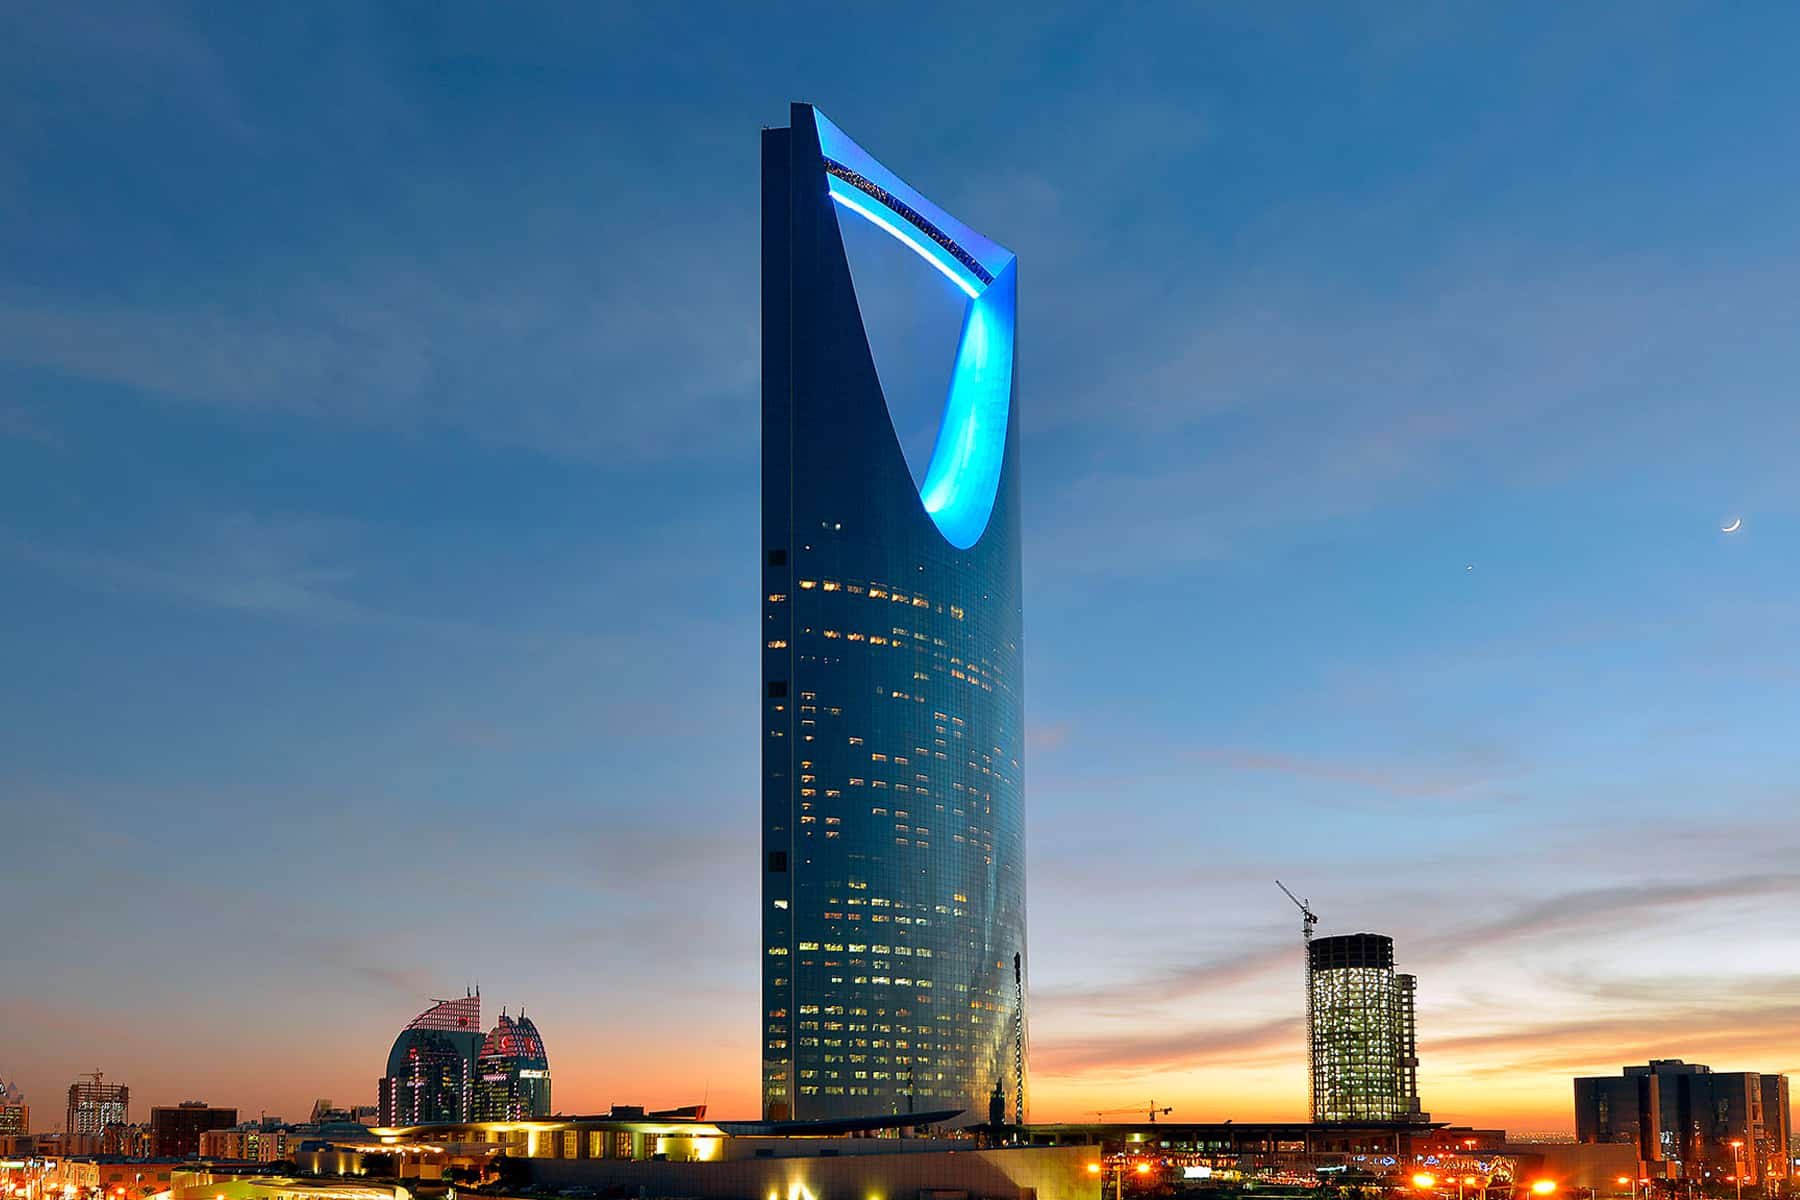 Four Seasons Hotel Kingdom Tower Riyadh Cristiano Ronaldo